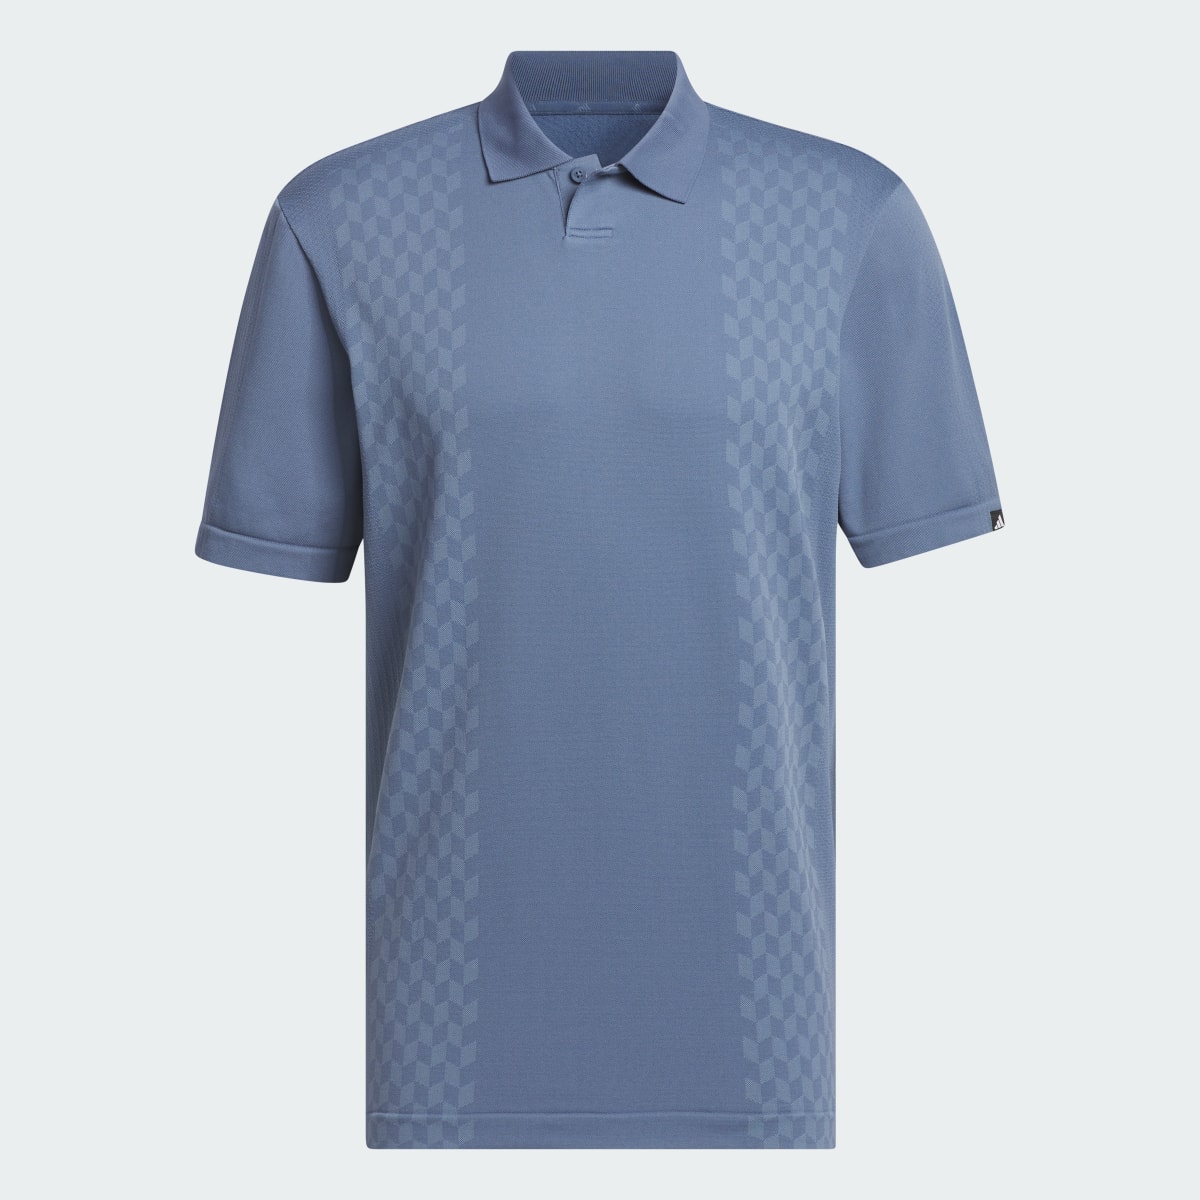 Adidas Ultimate365 Tour Primeknit Polo Shirt. 5